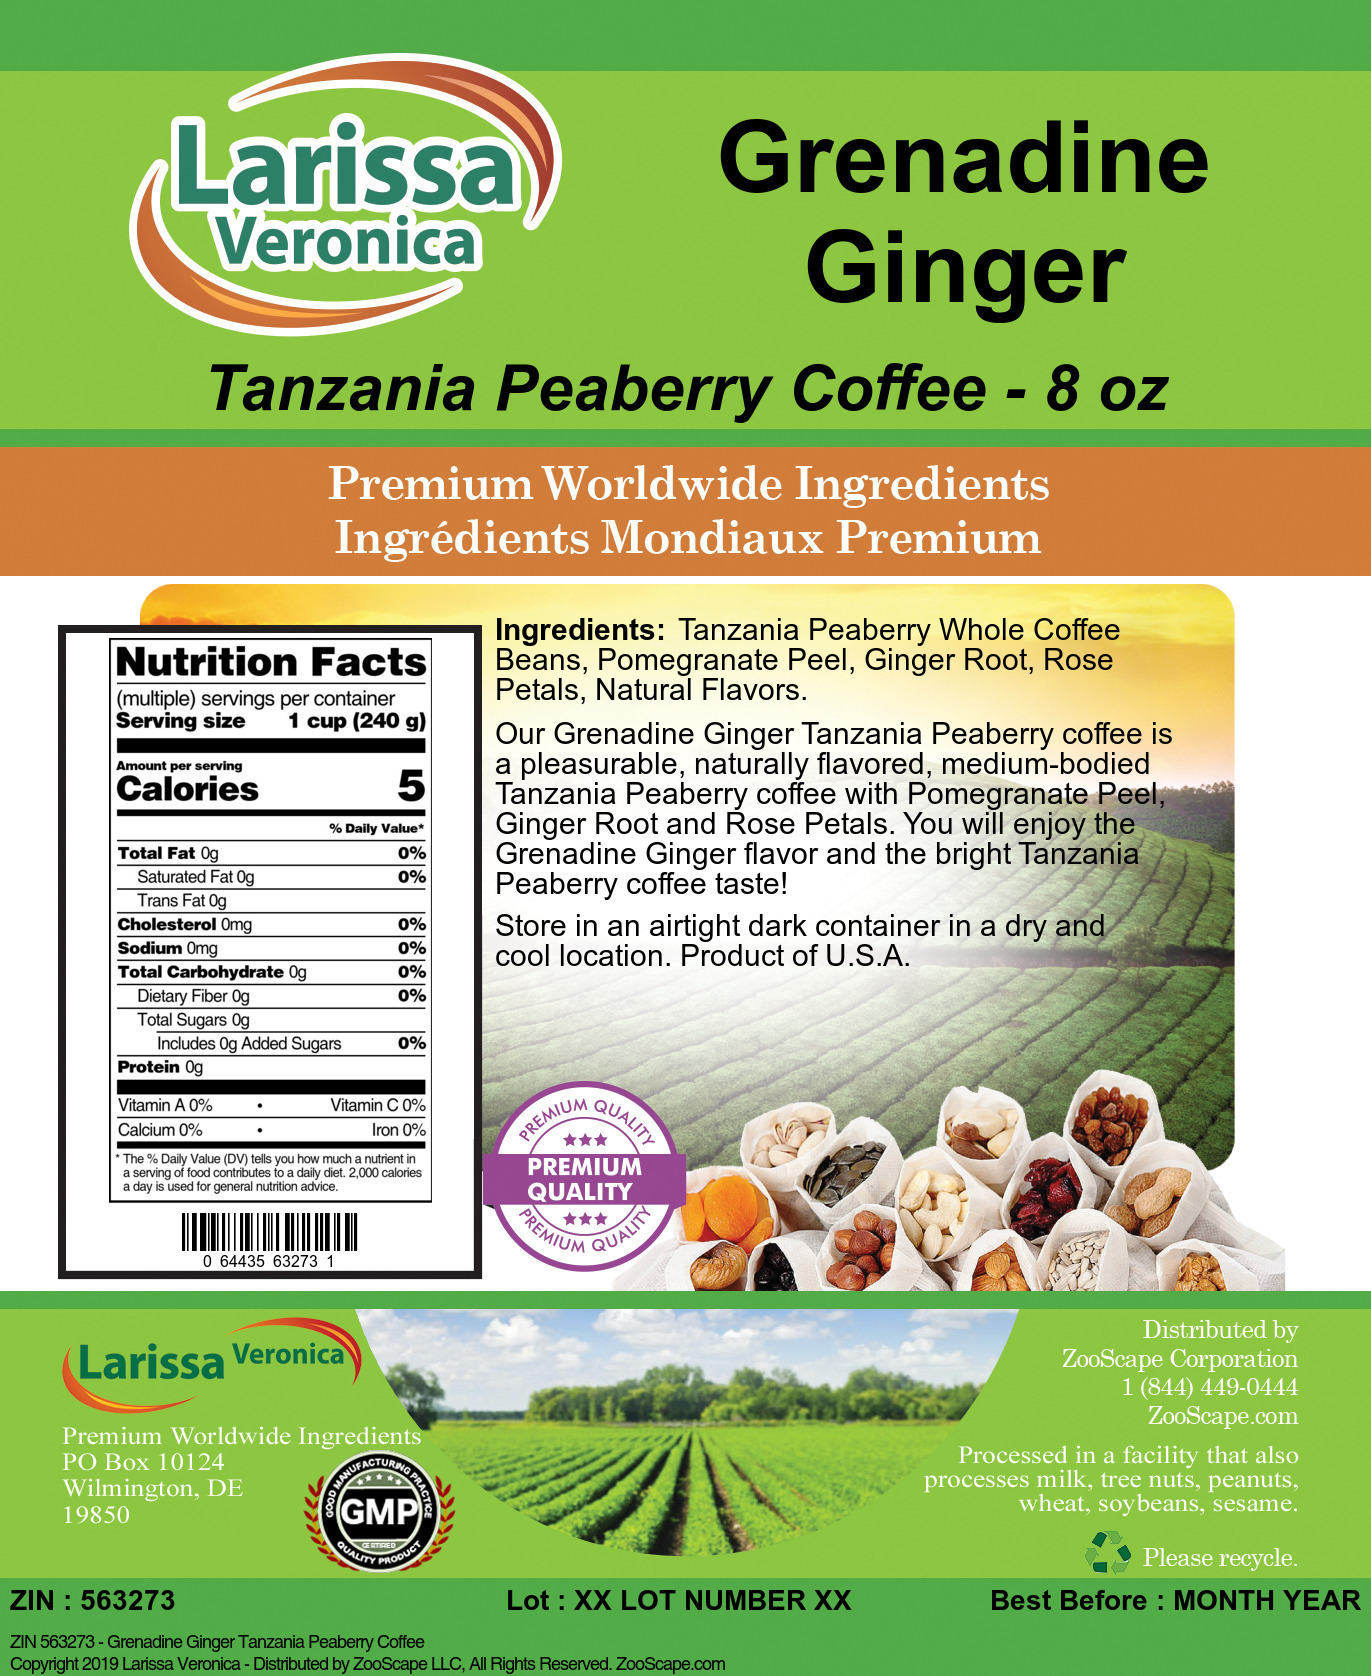 Grenadine Ginger Tanzania Peaberry Coffee - Label